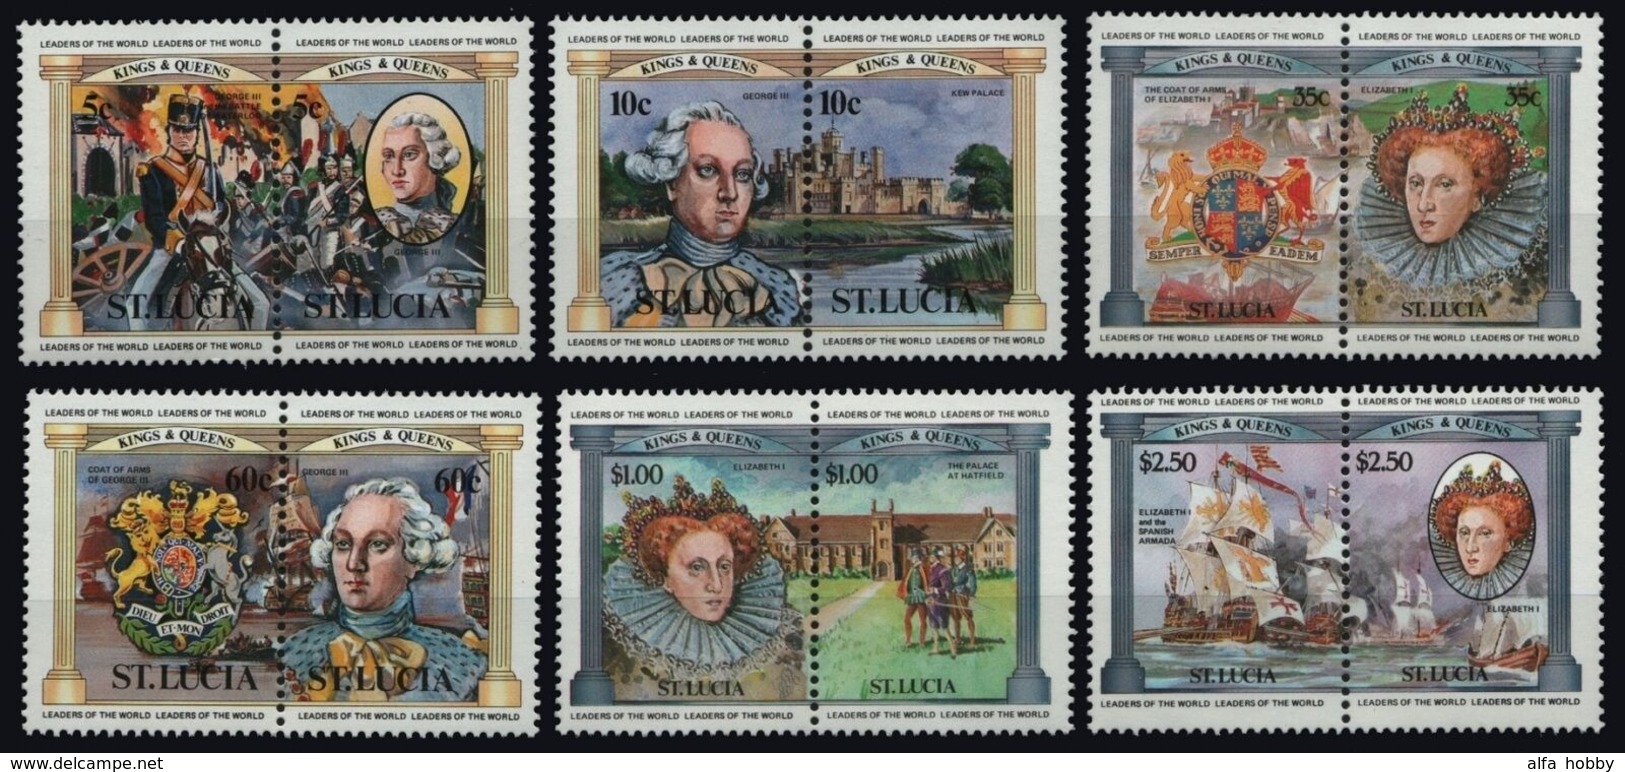 St. Lucia 1984-Mi. No. 632-643 ** - MNH-English Monarchs 12 Stamps - Royalties, Royals